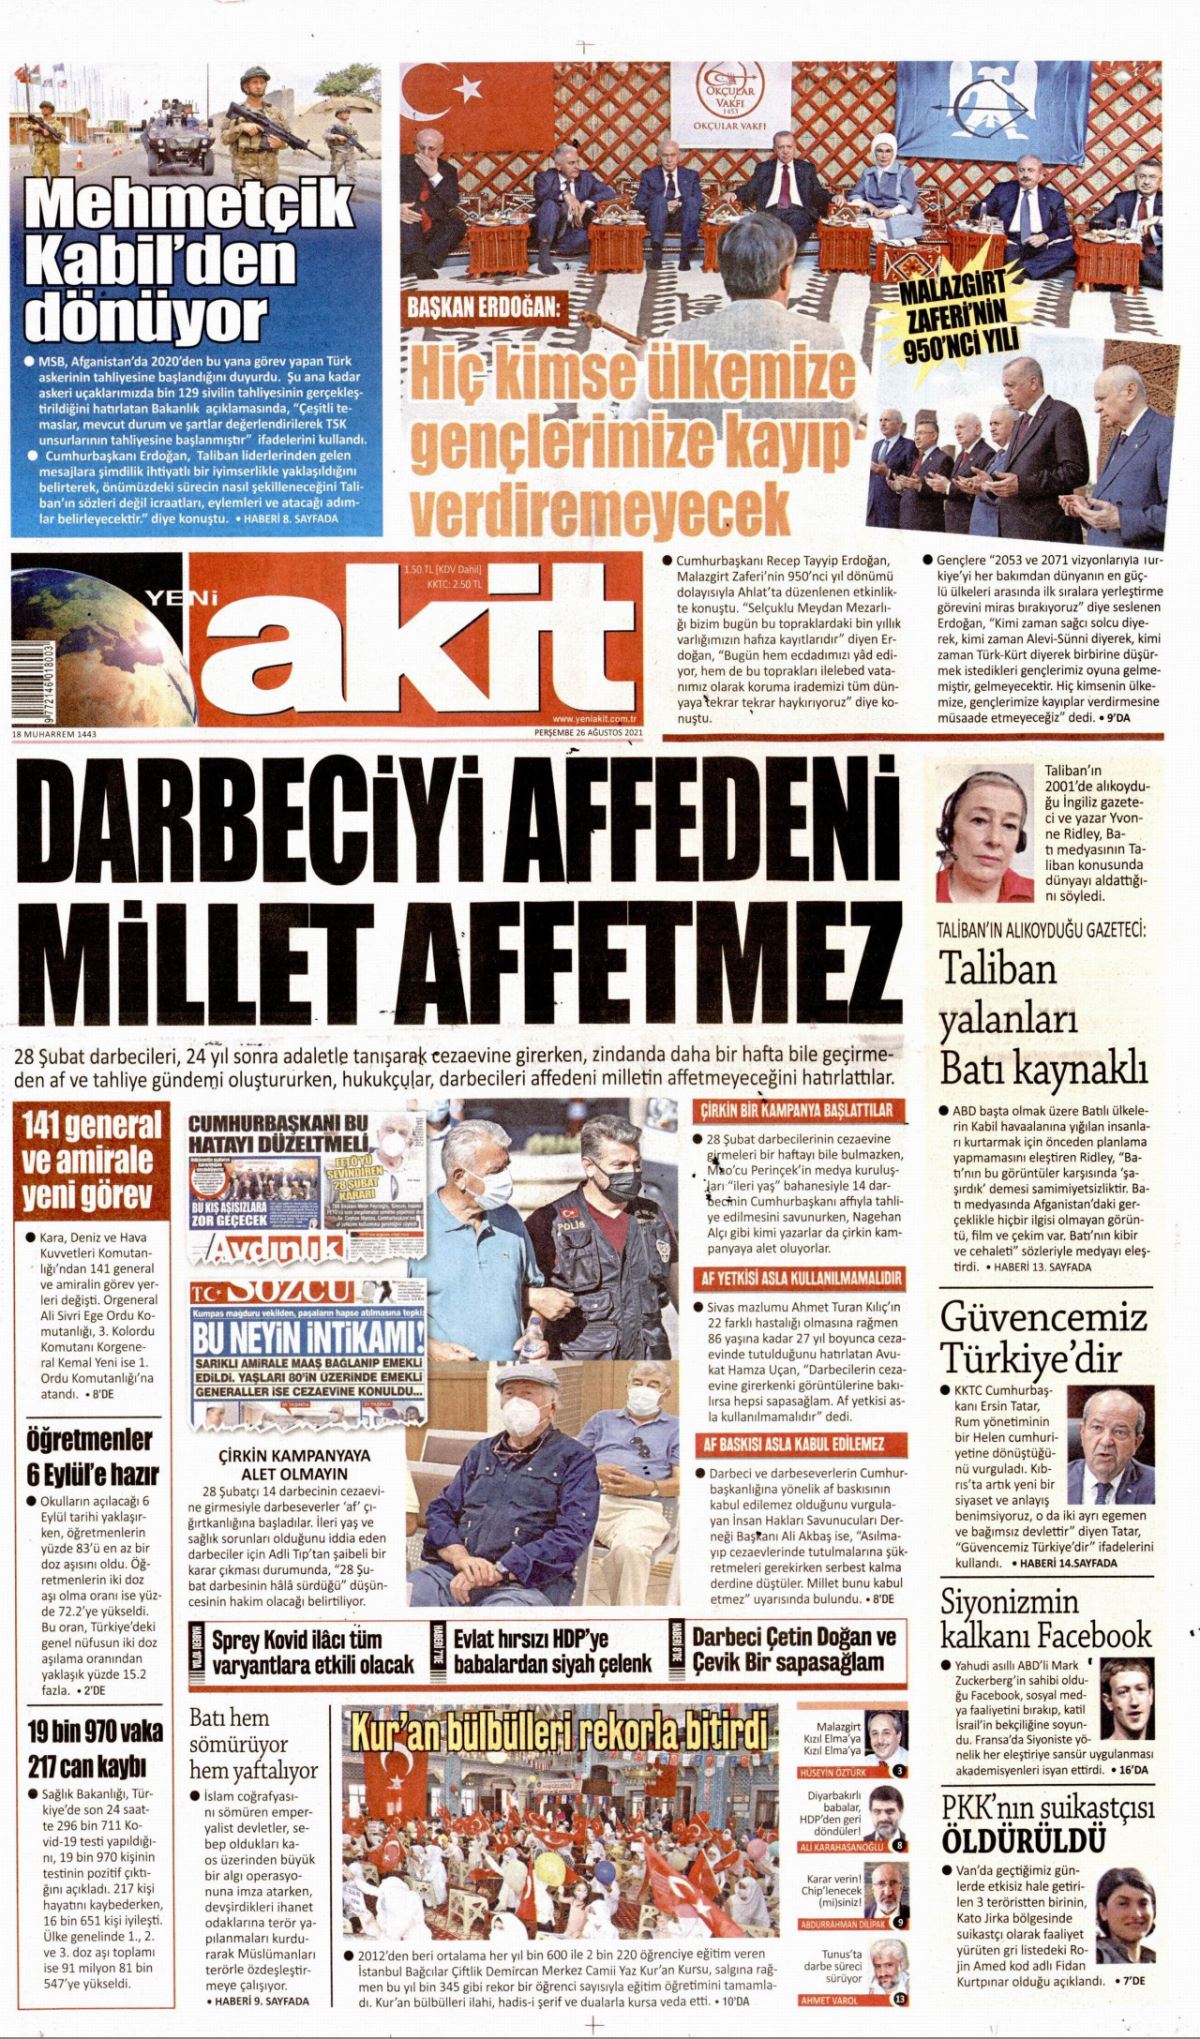 Manşetten hedef aldı: Akit'ten Erdoğan'a tehdit